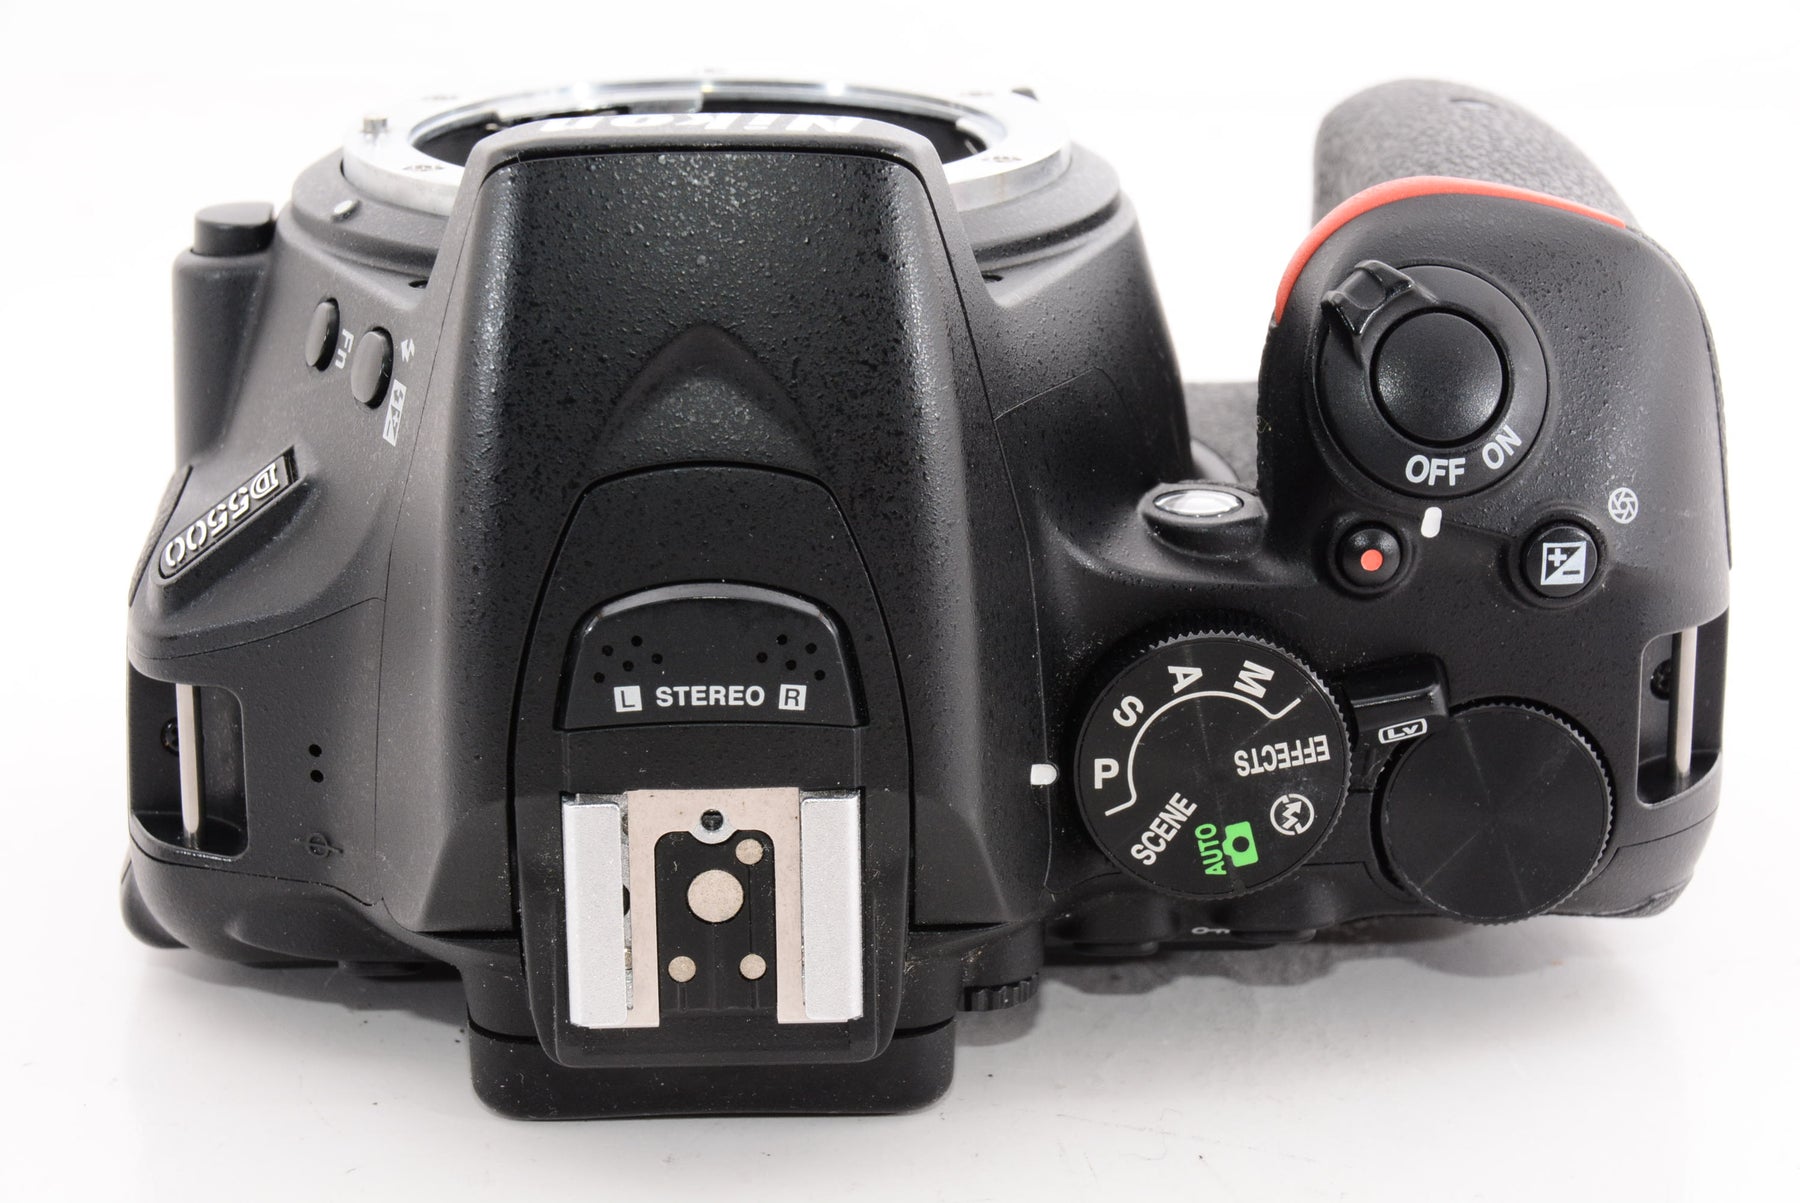 Nikon デジタル一眼レフカメラ D5500 ボディー ブラック 2416万画素 3.2型液晶 タッチパネル D5500BK - 1